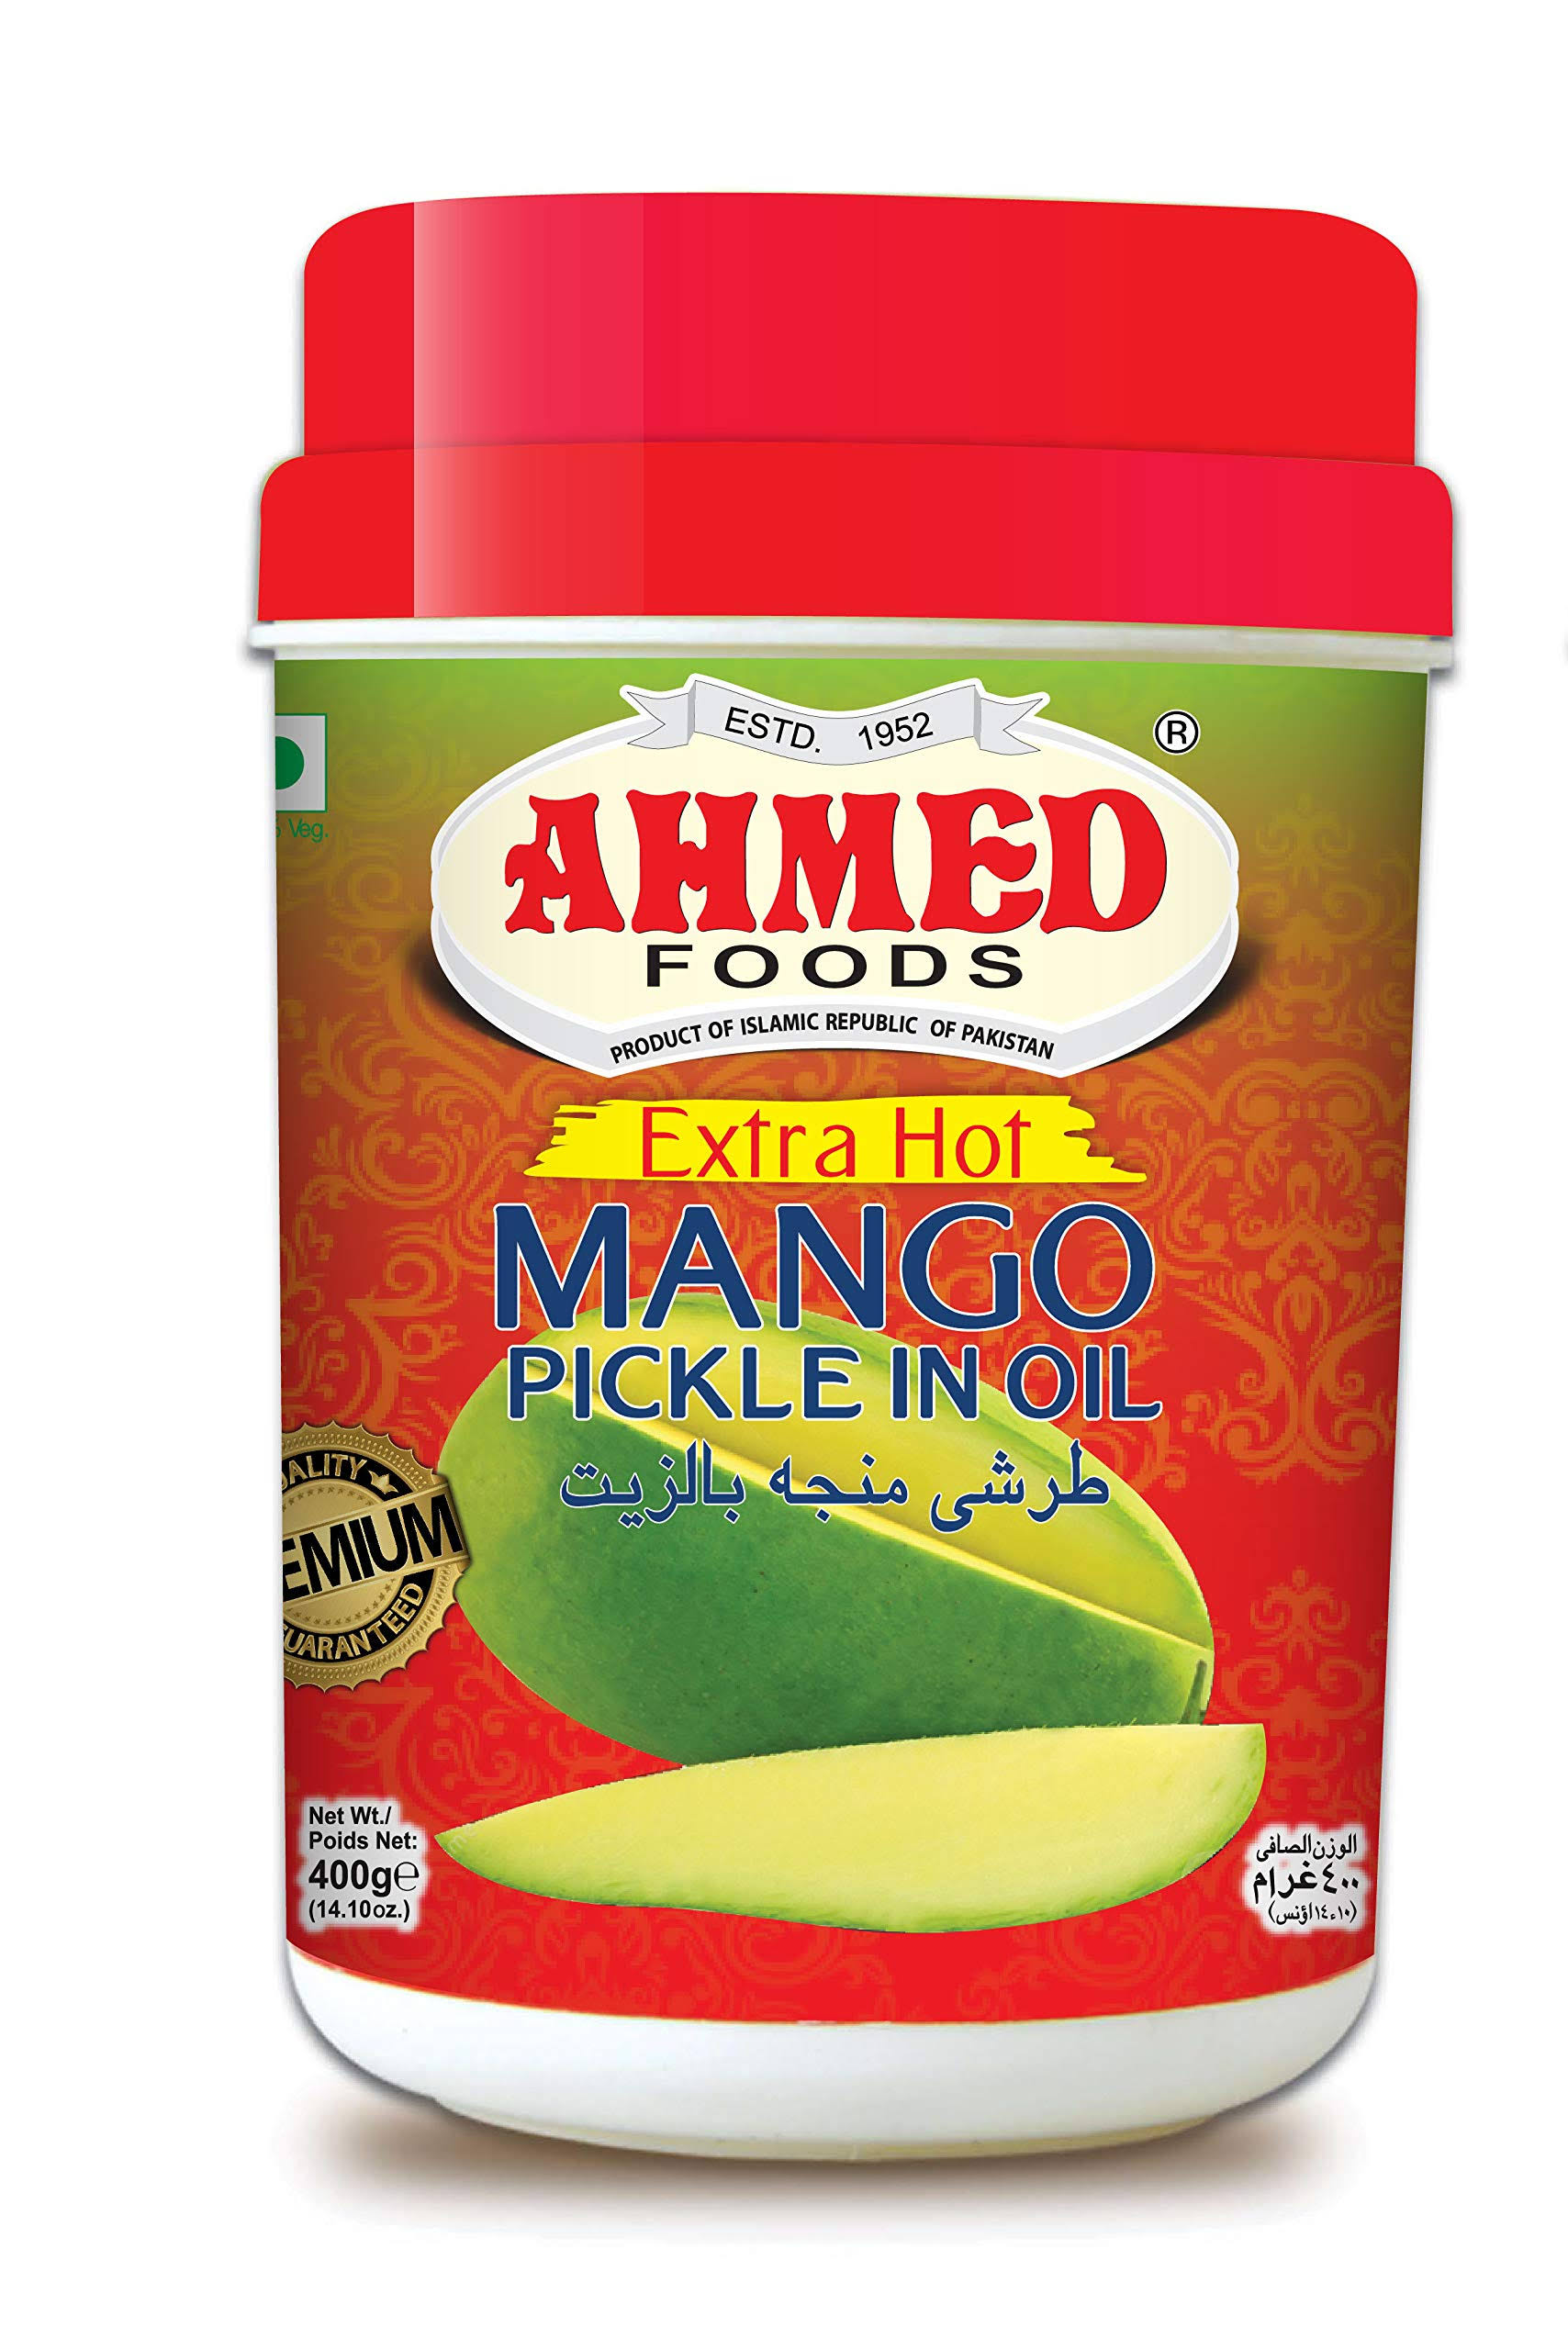 Ahmed Foods Pickle in Oil Vegan (extra Hot Mango)